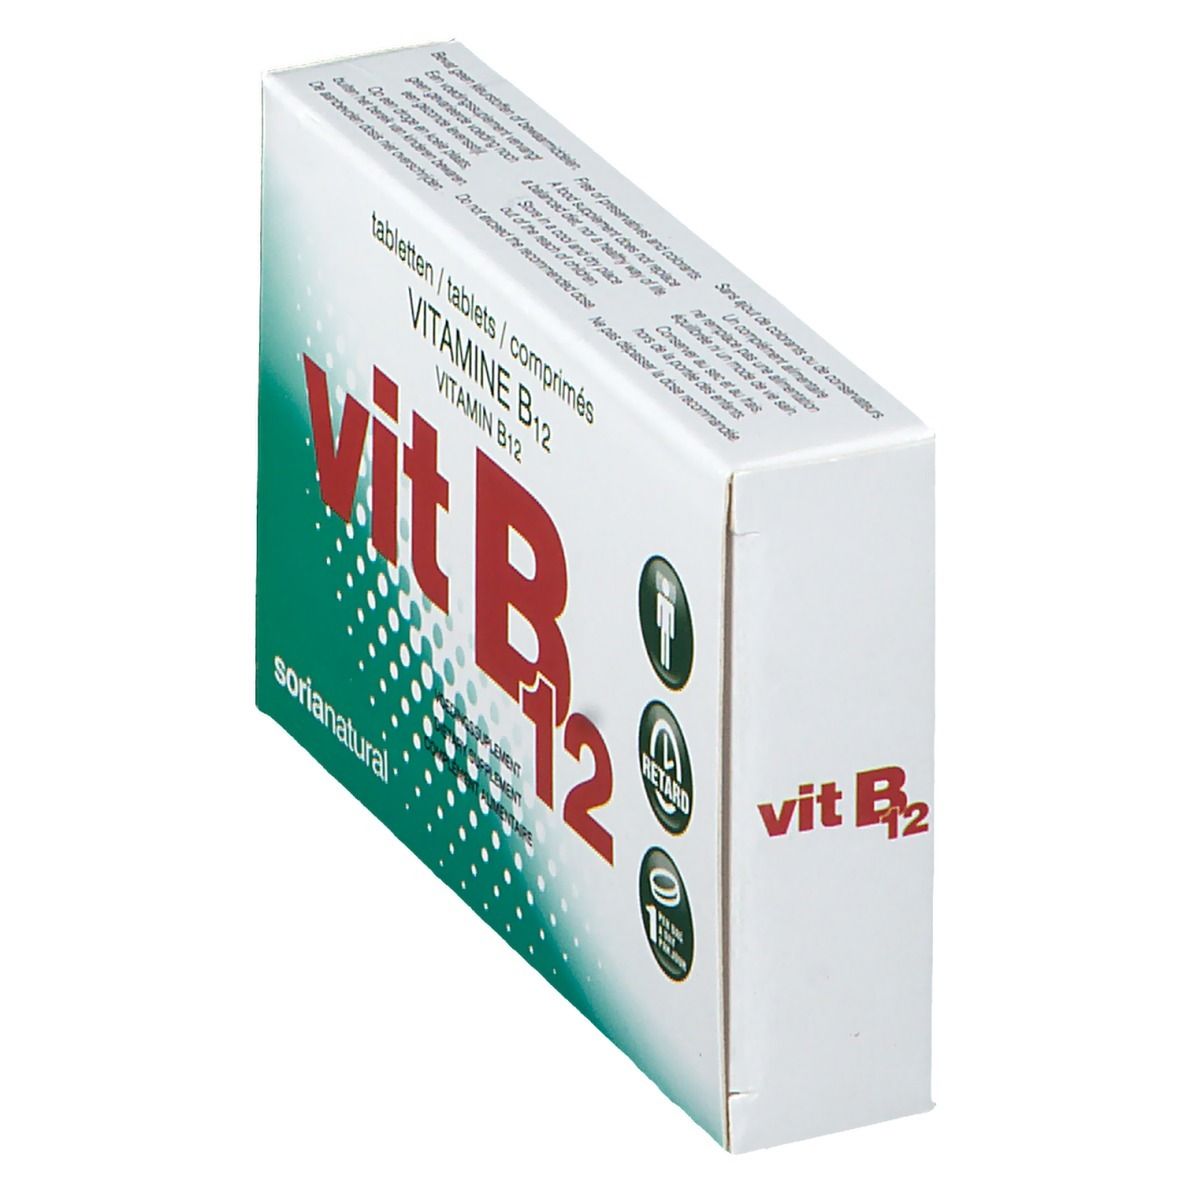 Soria Natural Vitamine B12